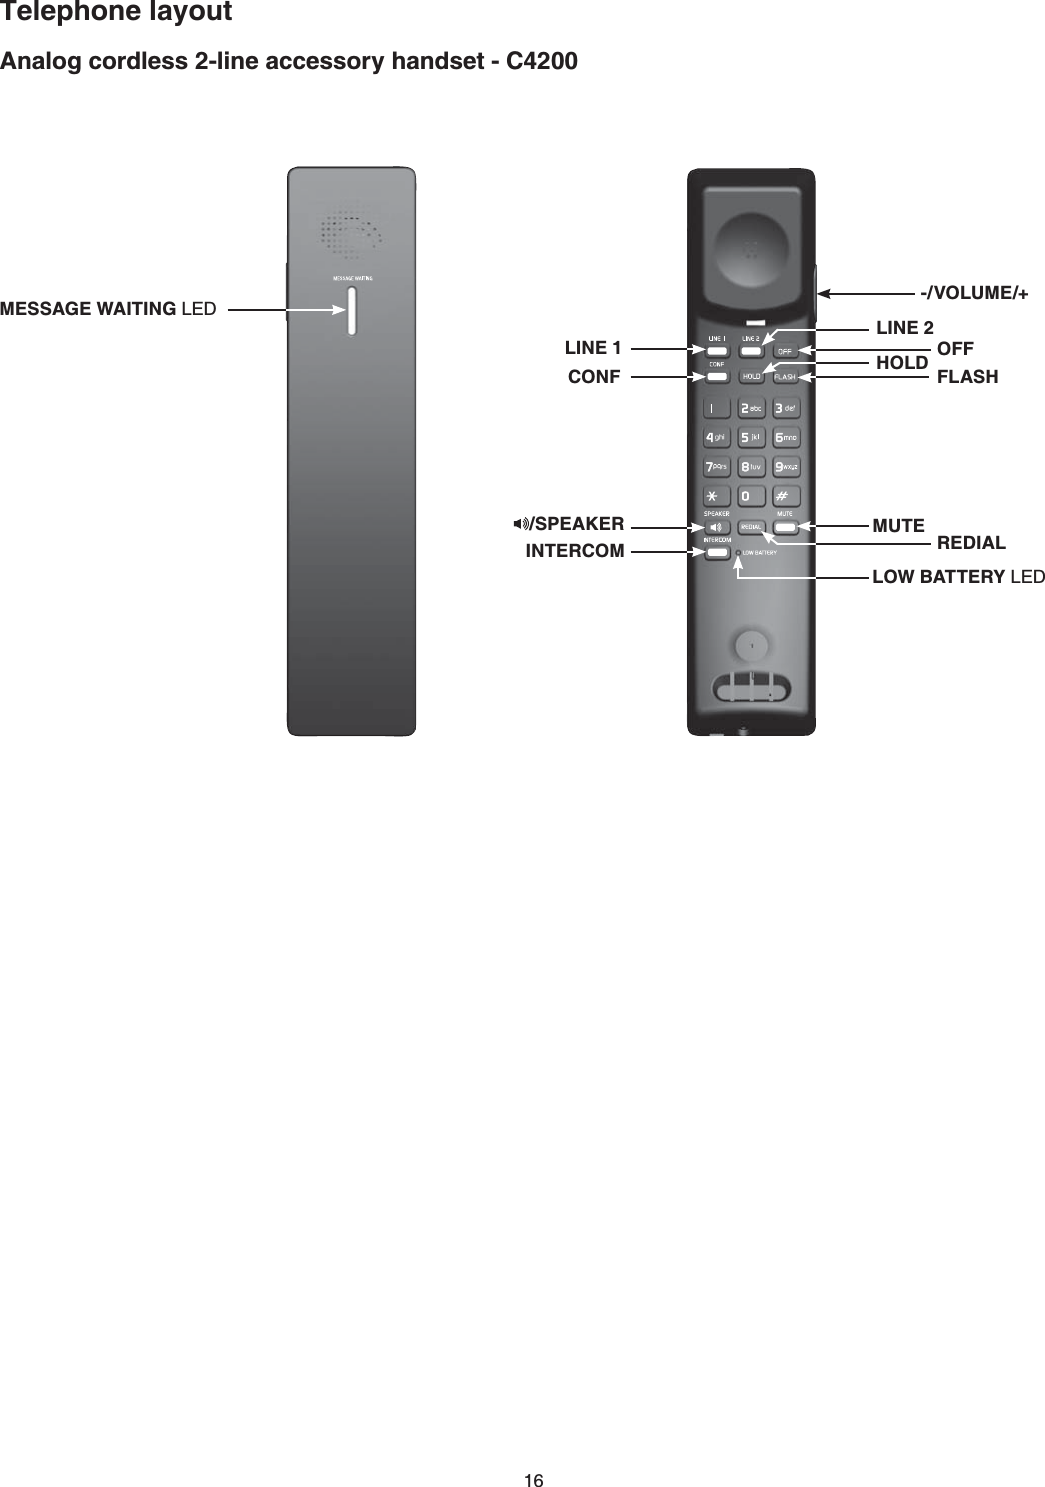 16Analog cordless 2-line accessory handset - C4200Telephone layoutLINE 1CONFLINE 2HOLD OFFFLASHMUTEMESSAGE WAITING LED -/VOLUME/+/SPEAKER REDIALINTERCOMLOW BATTERY LED